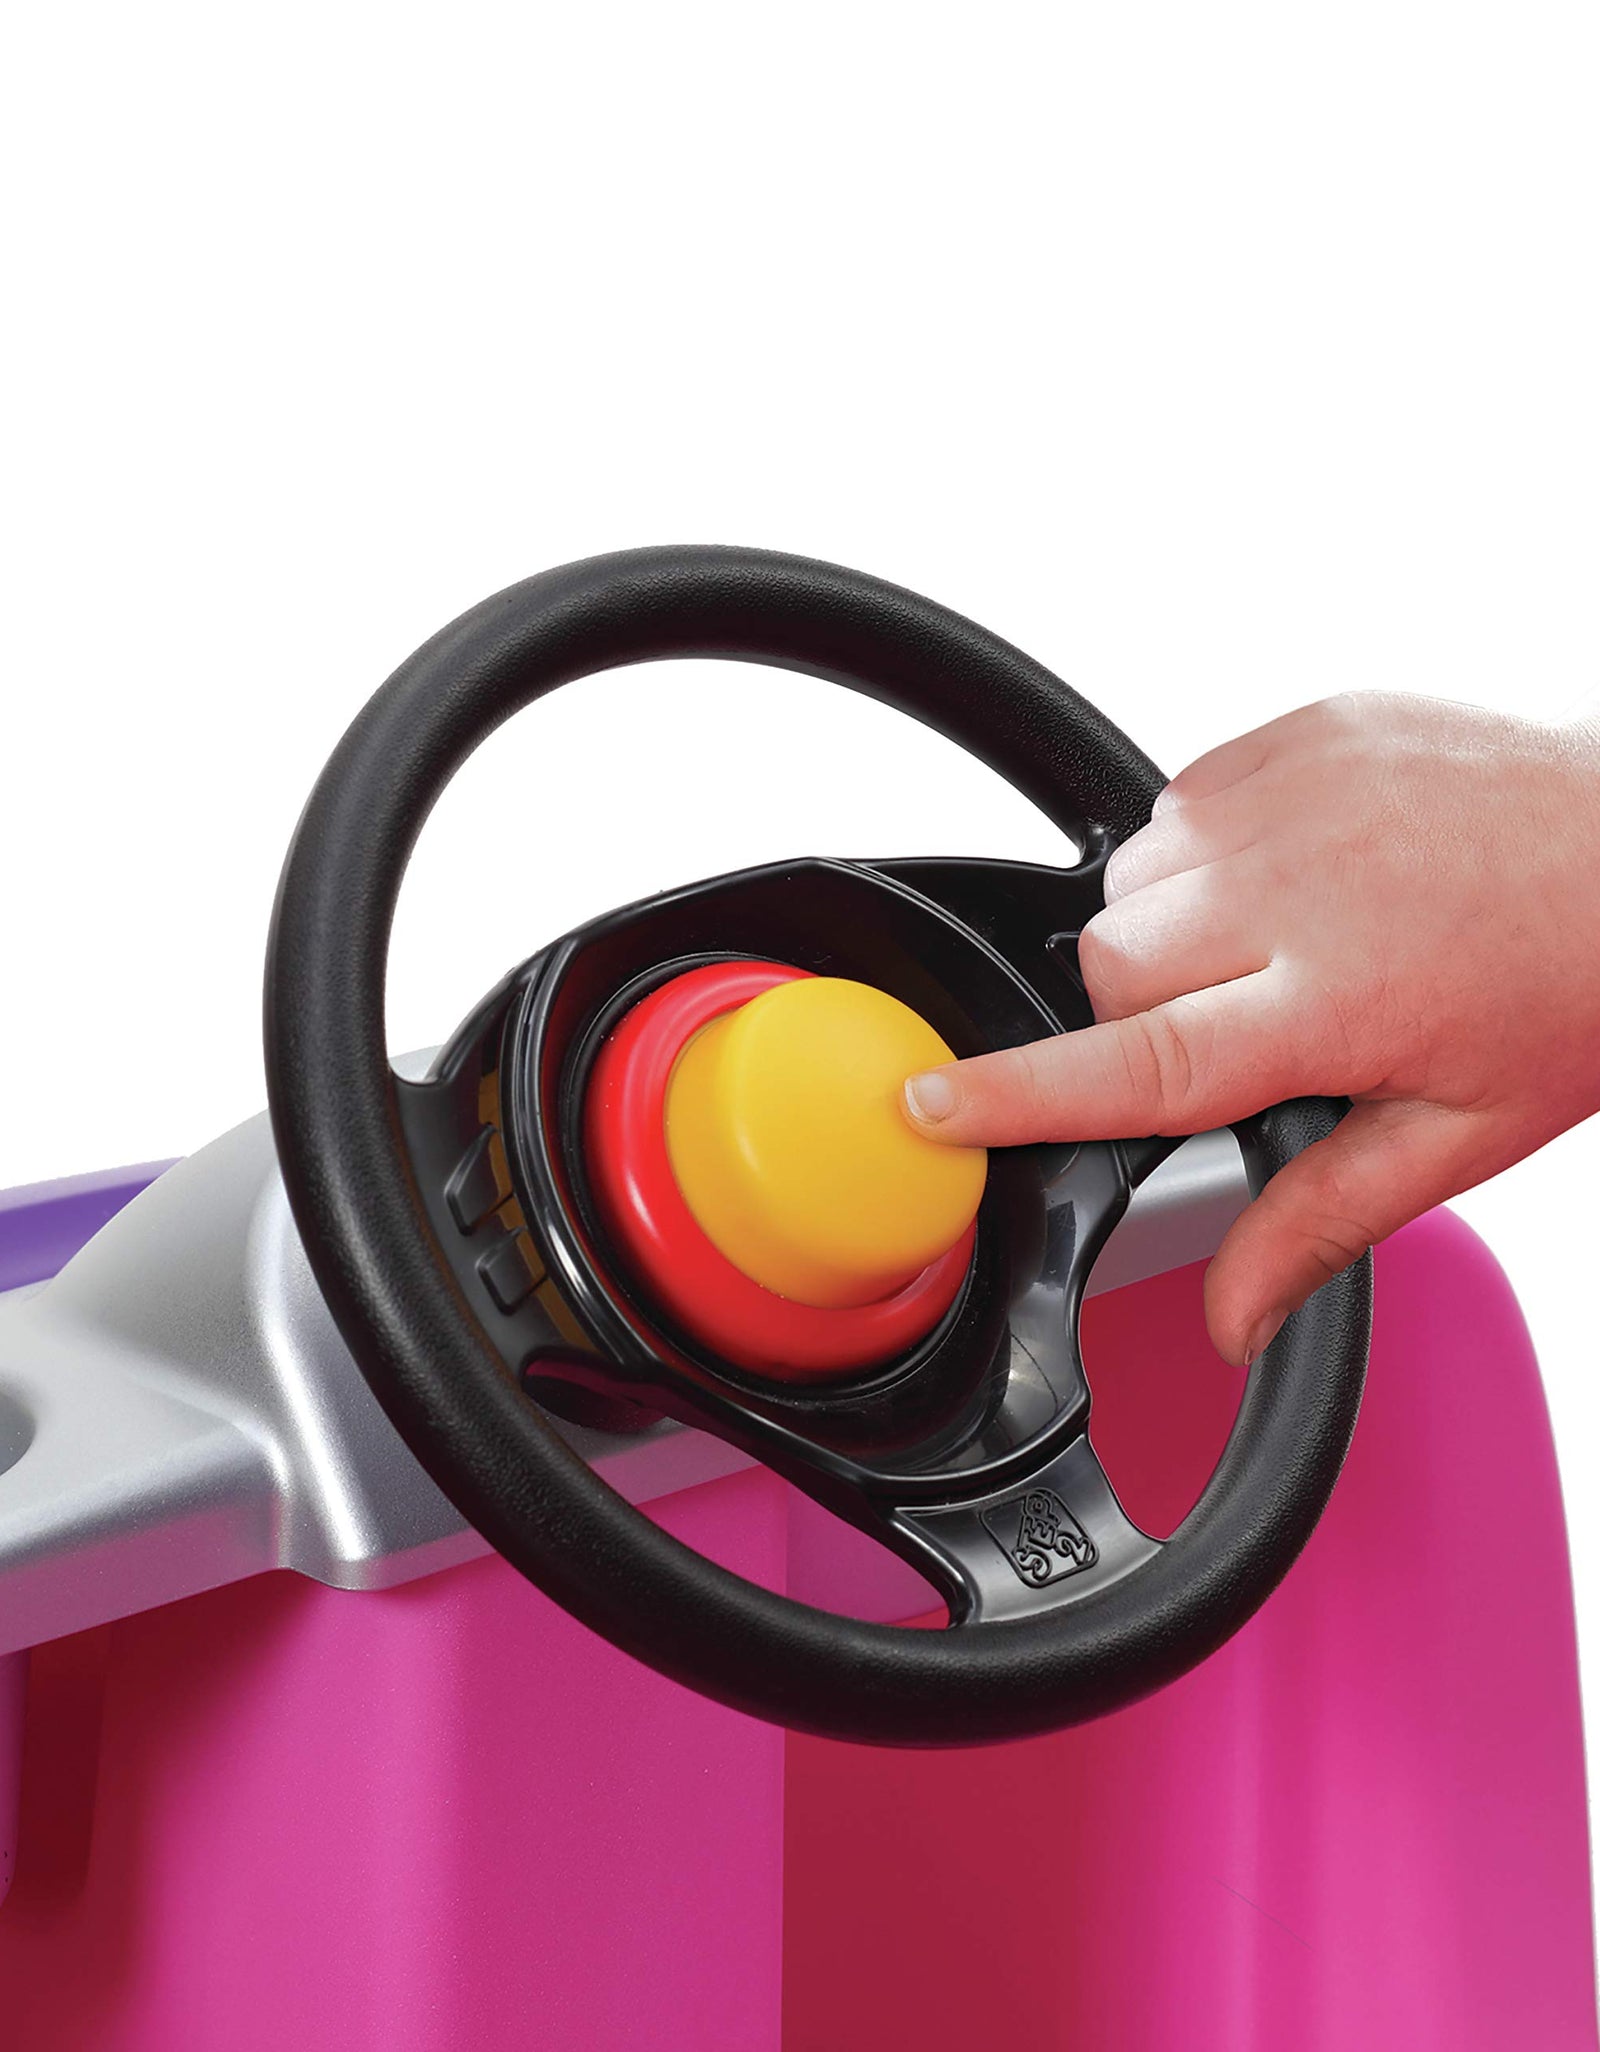 Step2 Whisper Ride II Push Car | Pink Toddler Ride On Toy